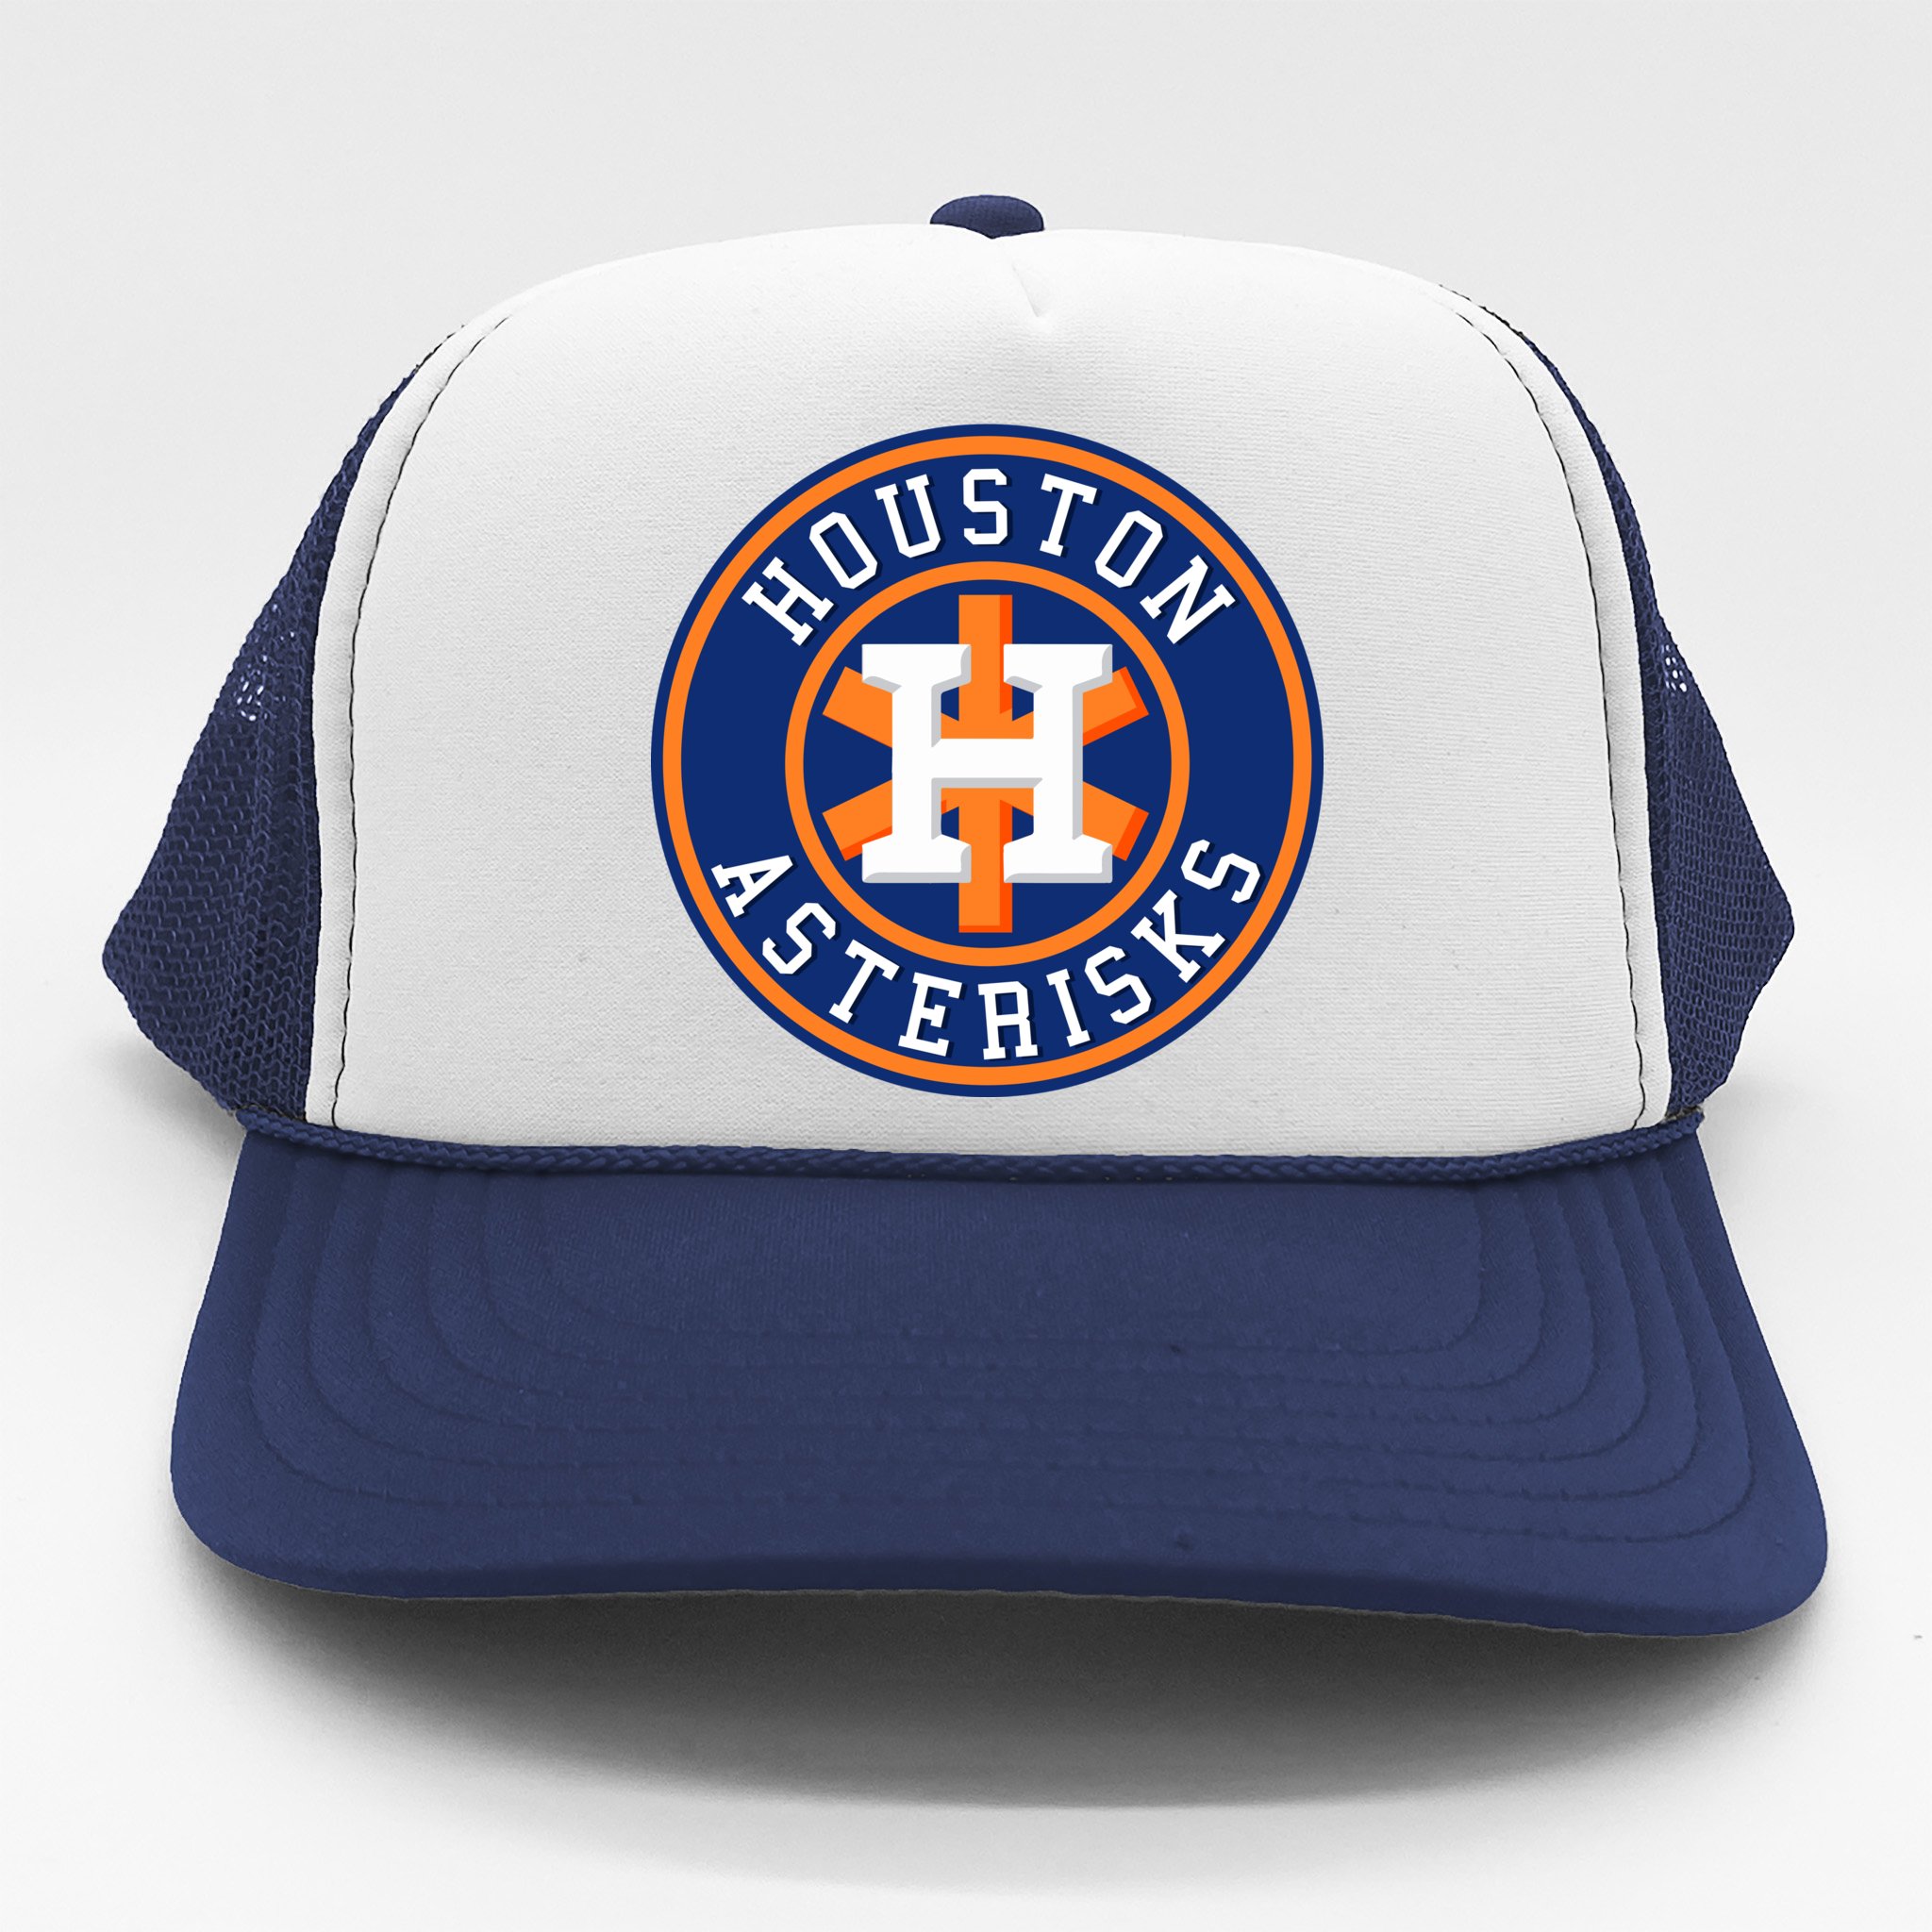 Houston Asterisks Baseball Team' Snapback Cap